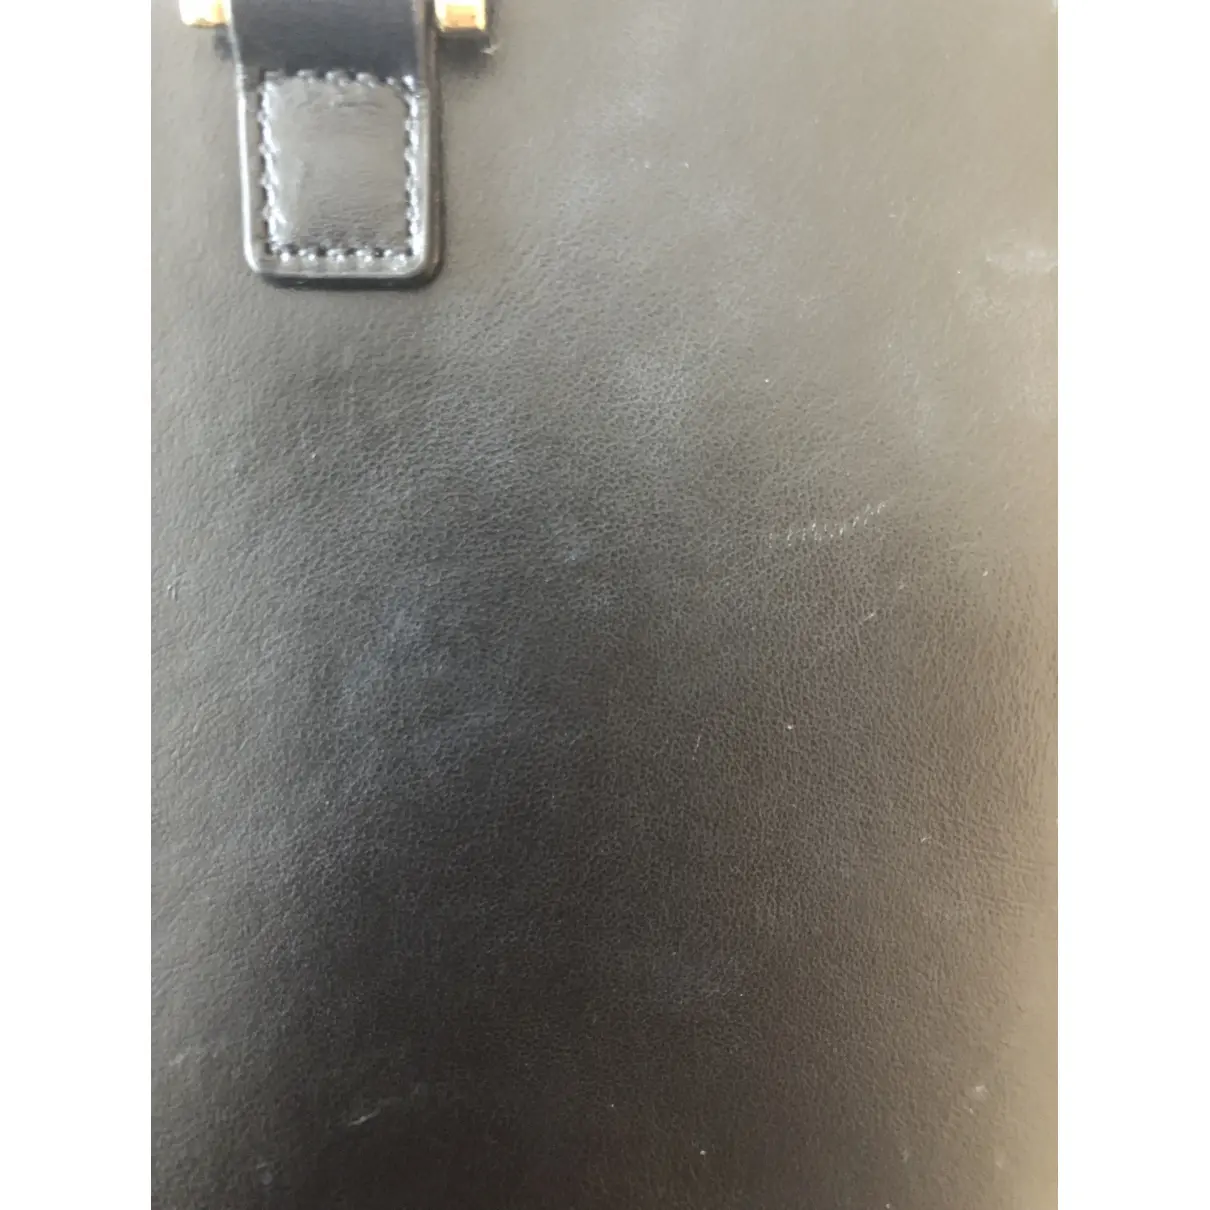 Buy Saint Laurent Monogram Cabas leather tote online